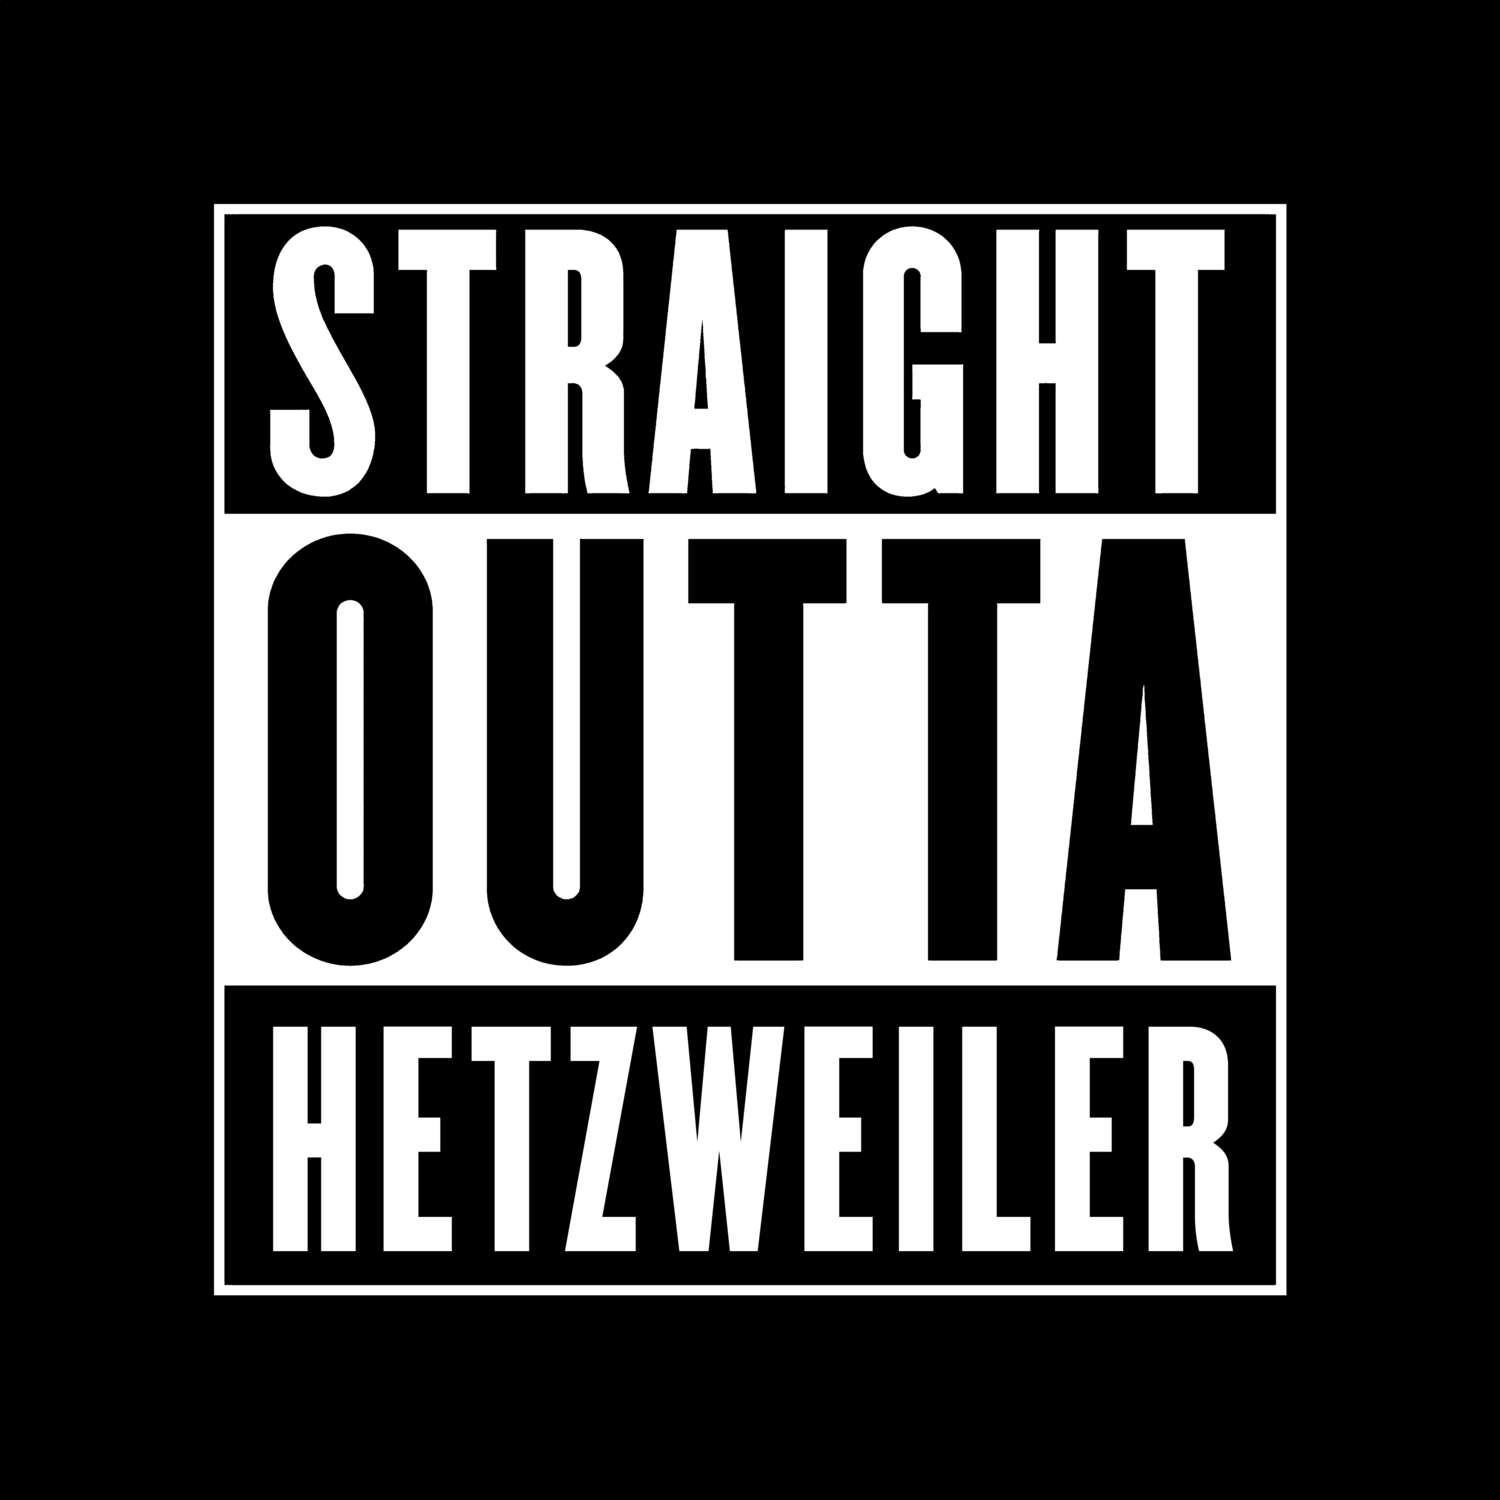 Hetzweiler T-Shirt »Straight Outta«